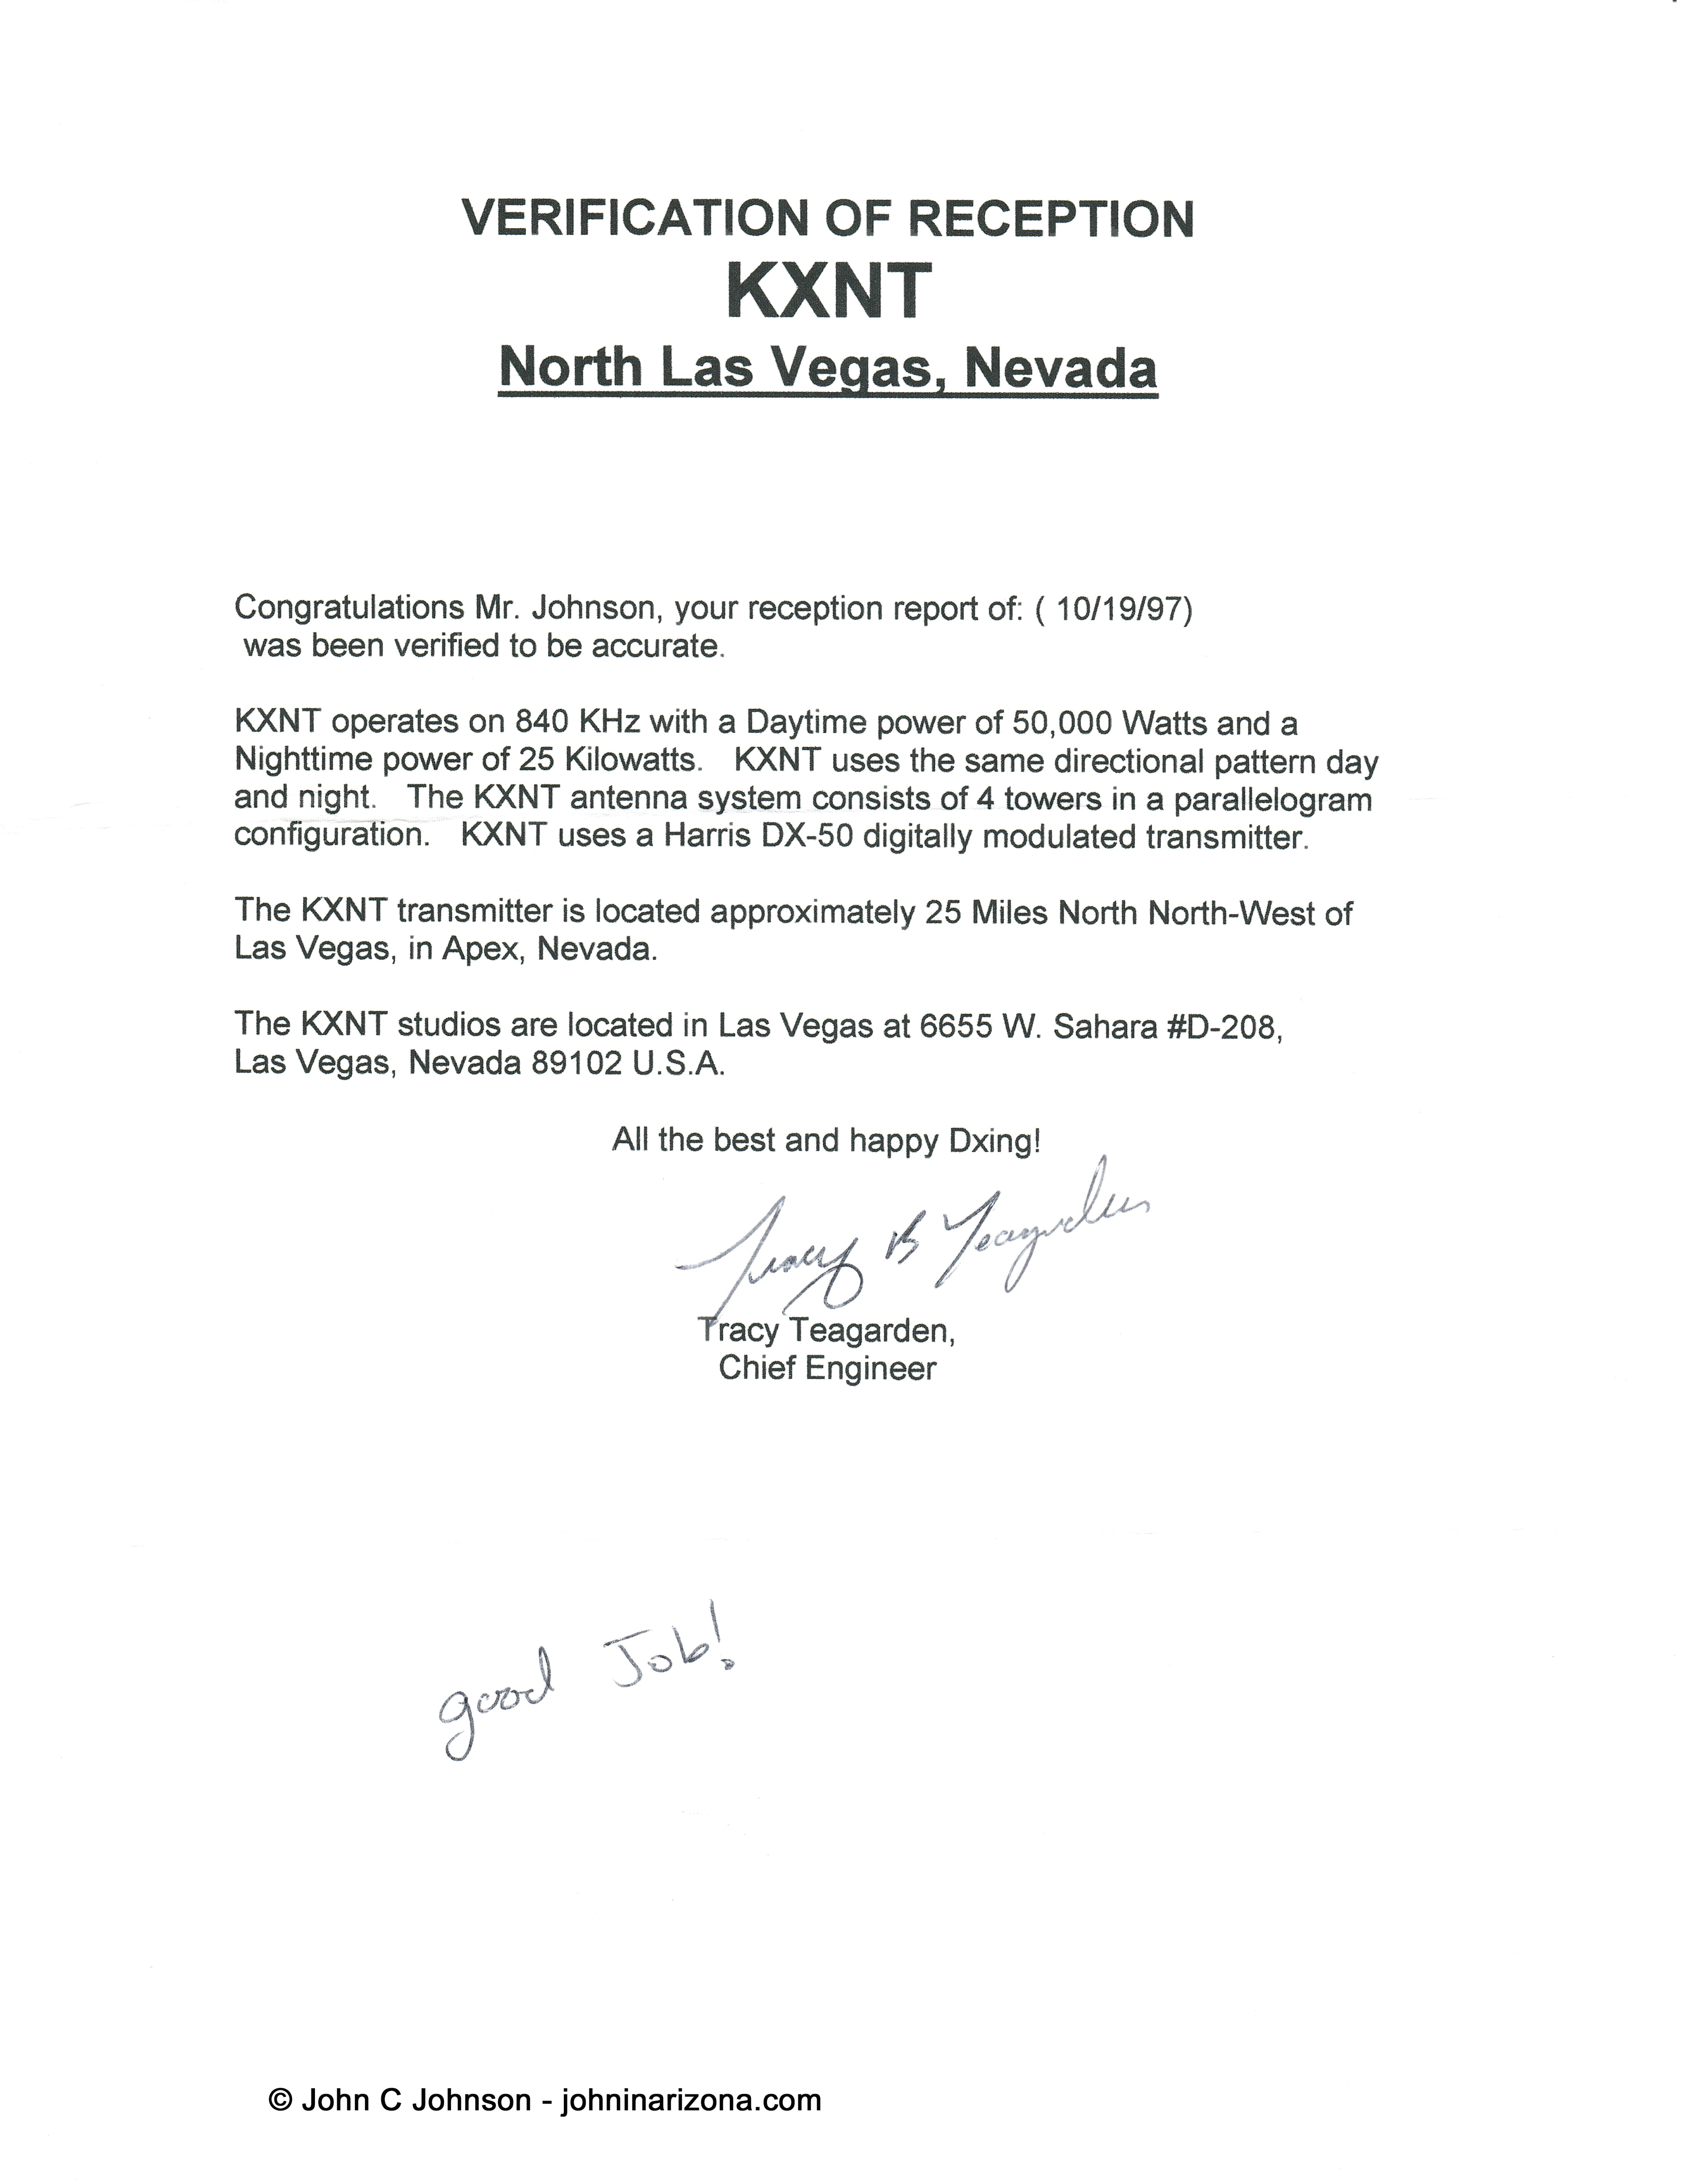 KXNT Radio 840 North Las Vegas, Nevada